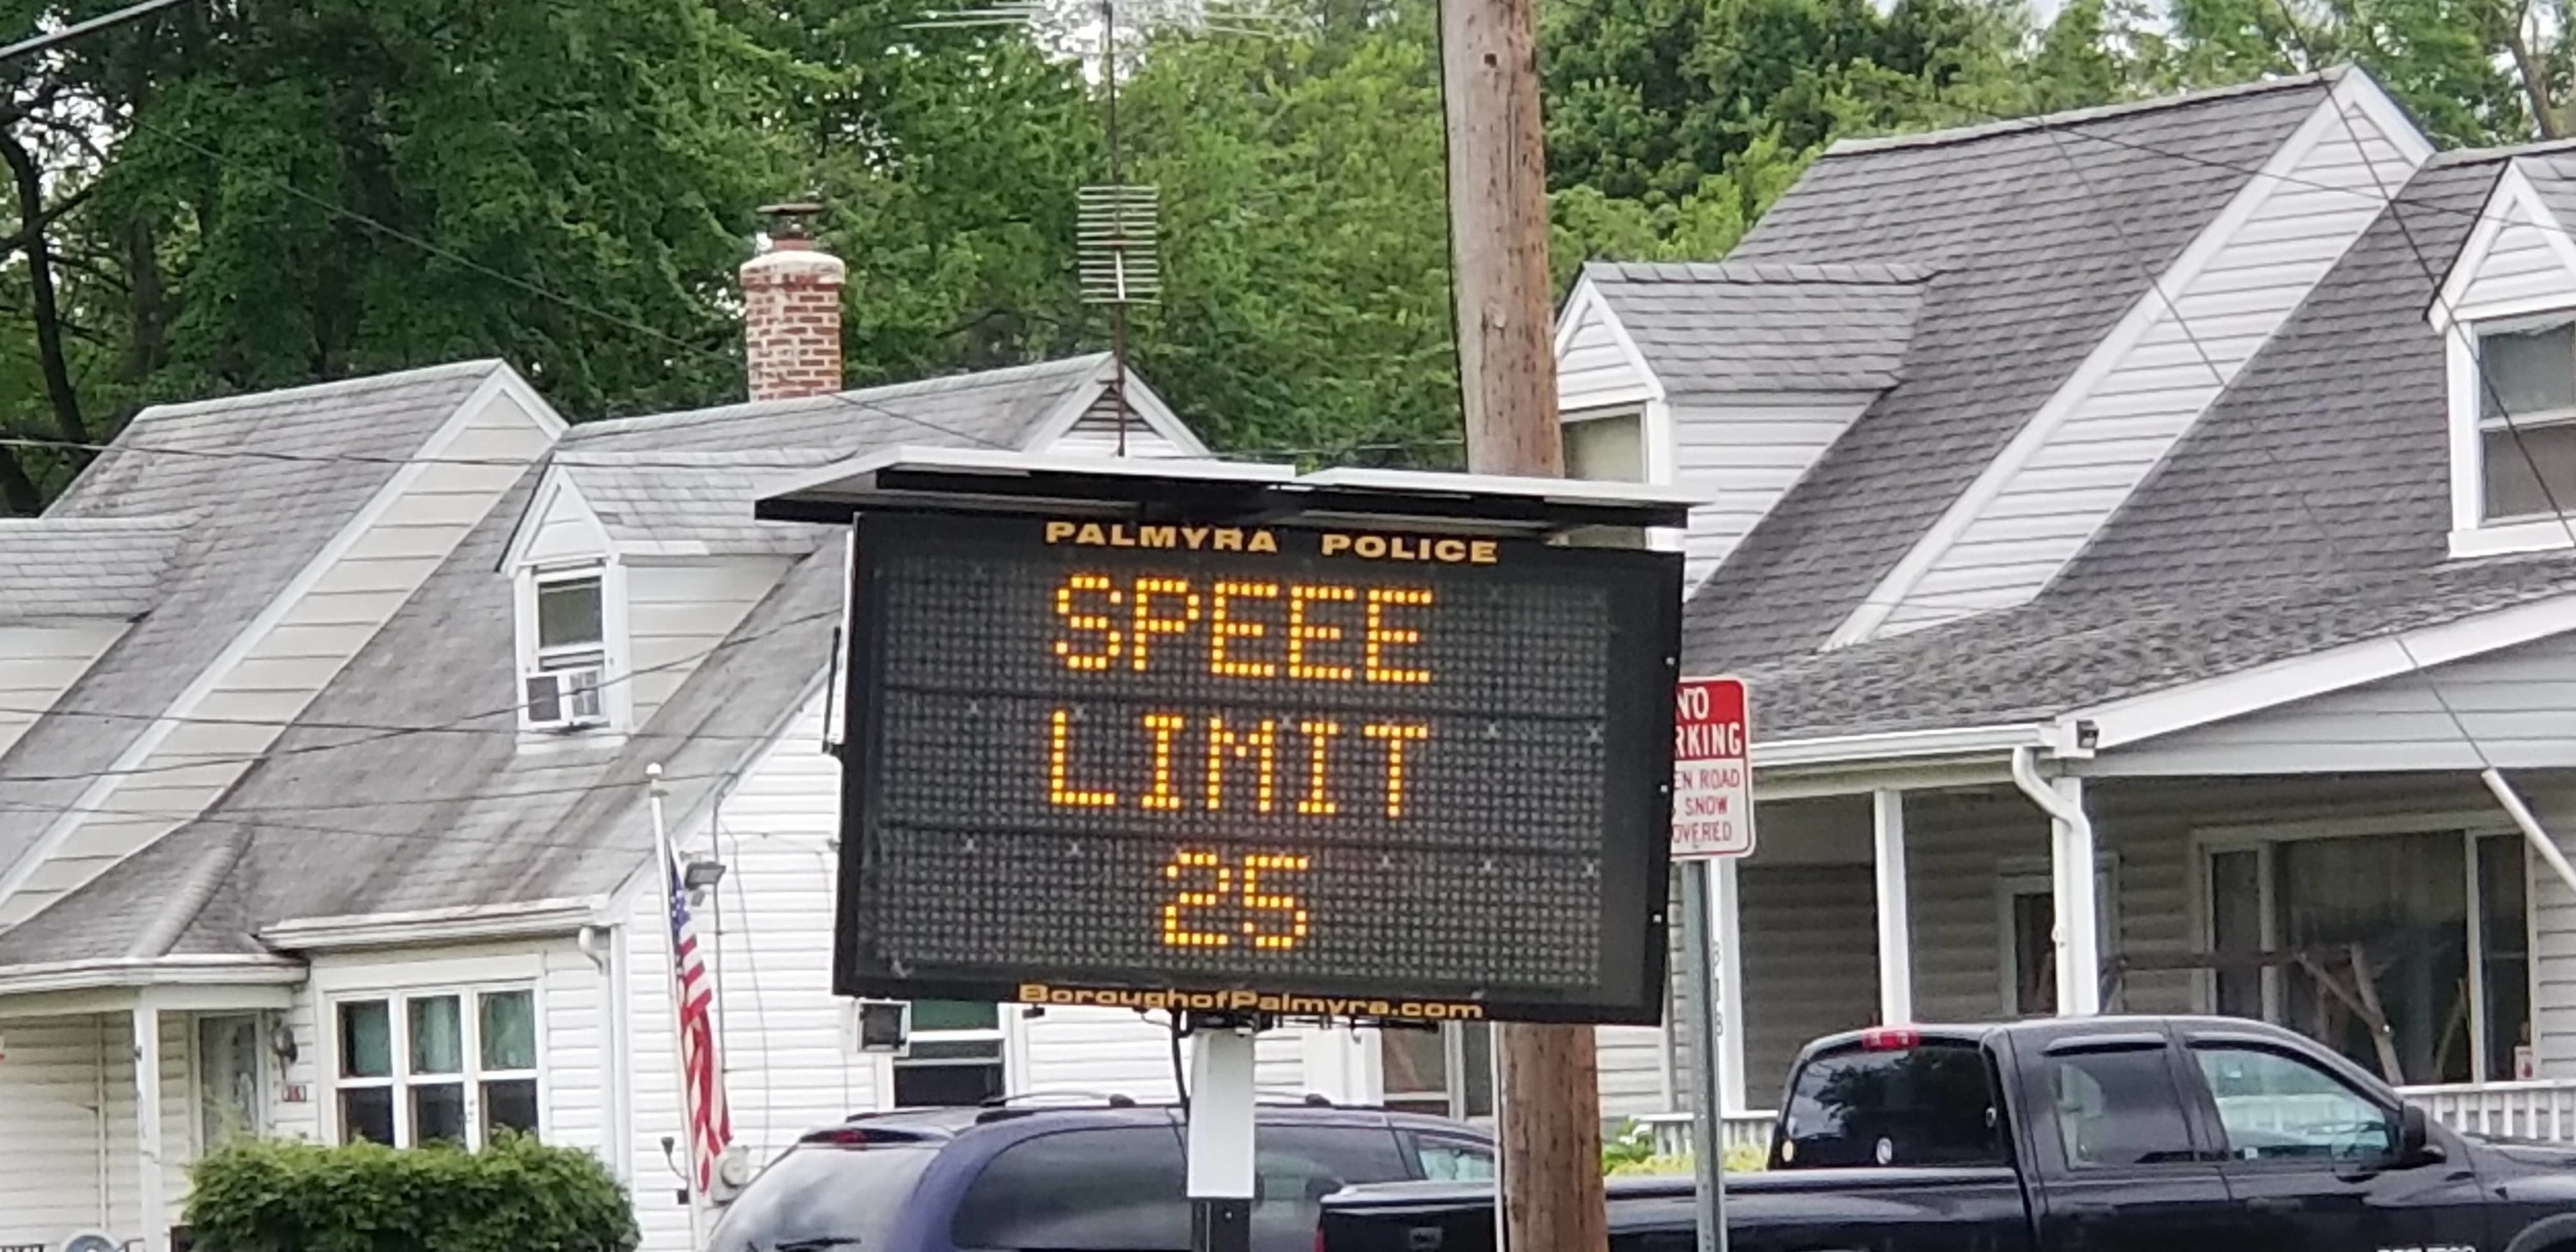 speed limit sign reading speeee limit